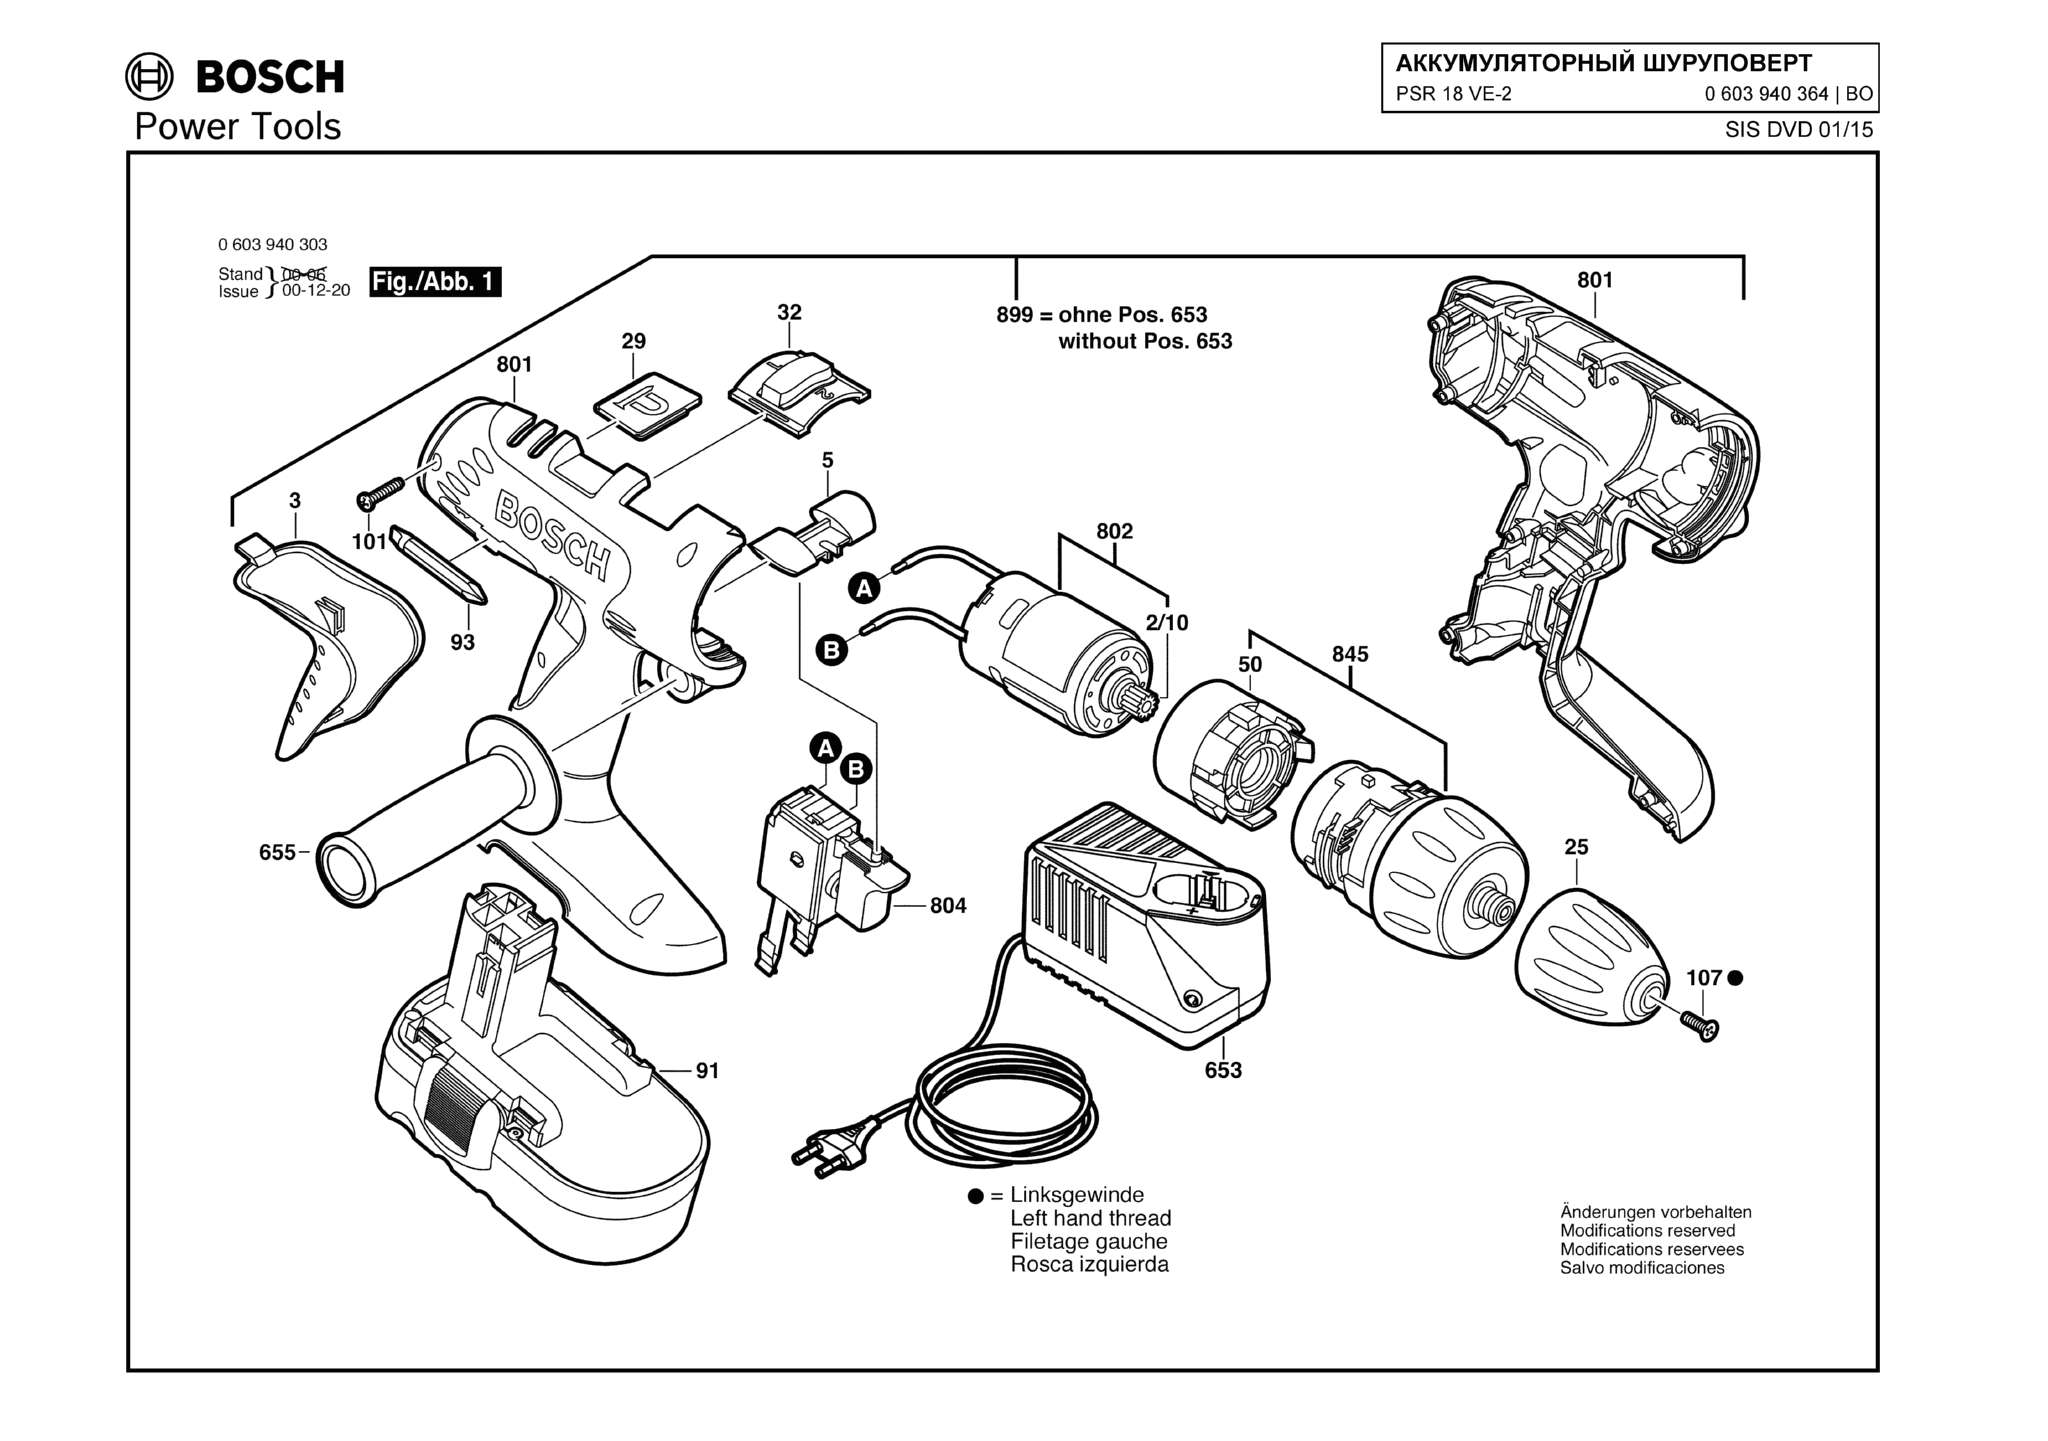 Запчасти, схема и деталировка Bosch PSR 18 VE-2 (ТИП 0603940364)